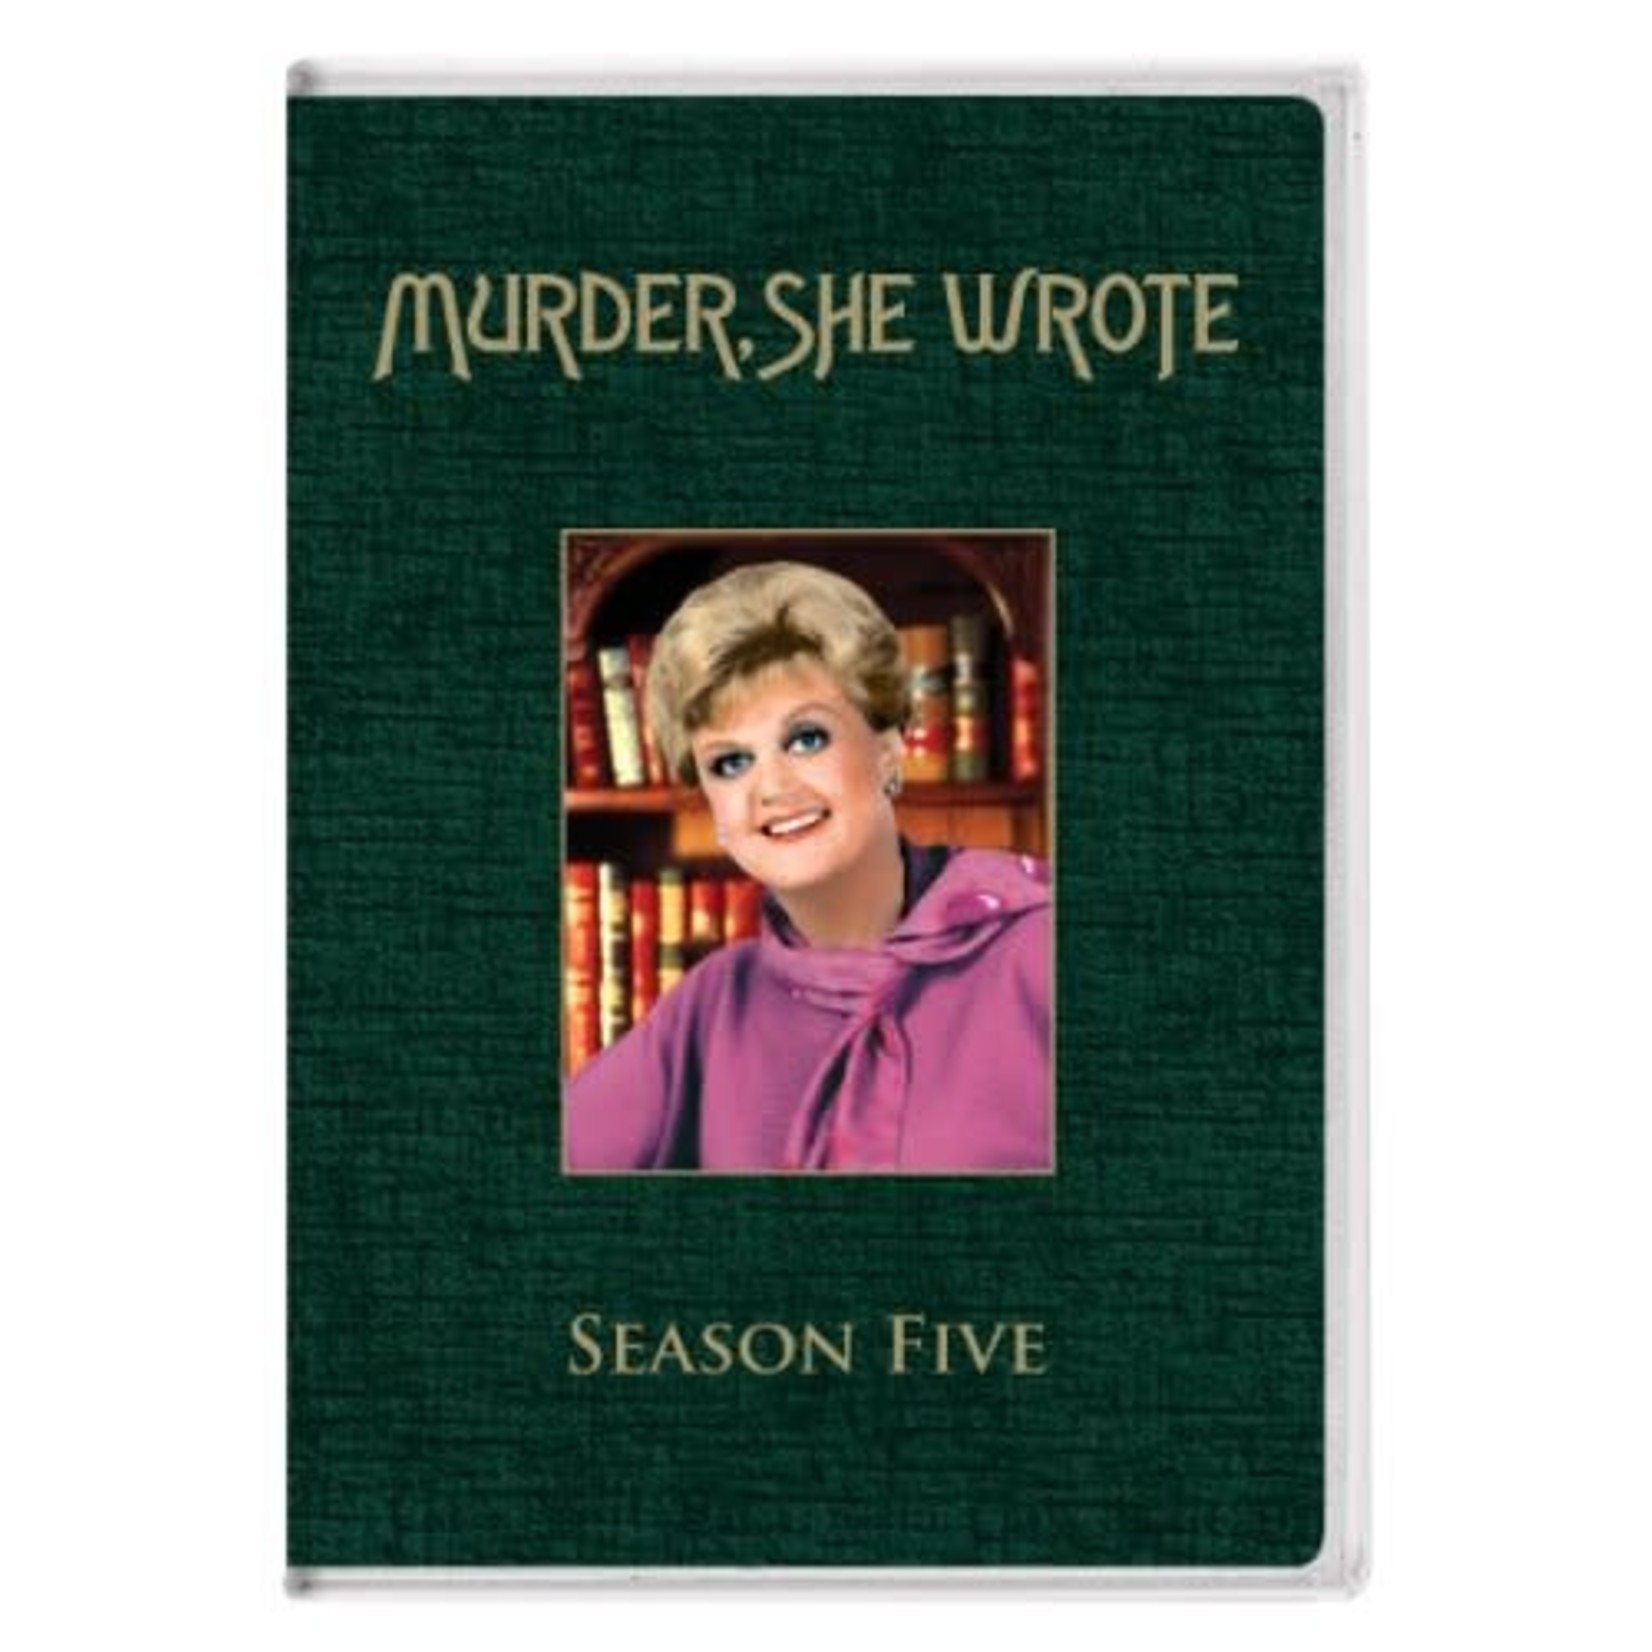 Murder, She Wrote - Season 5 [USED DVD]